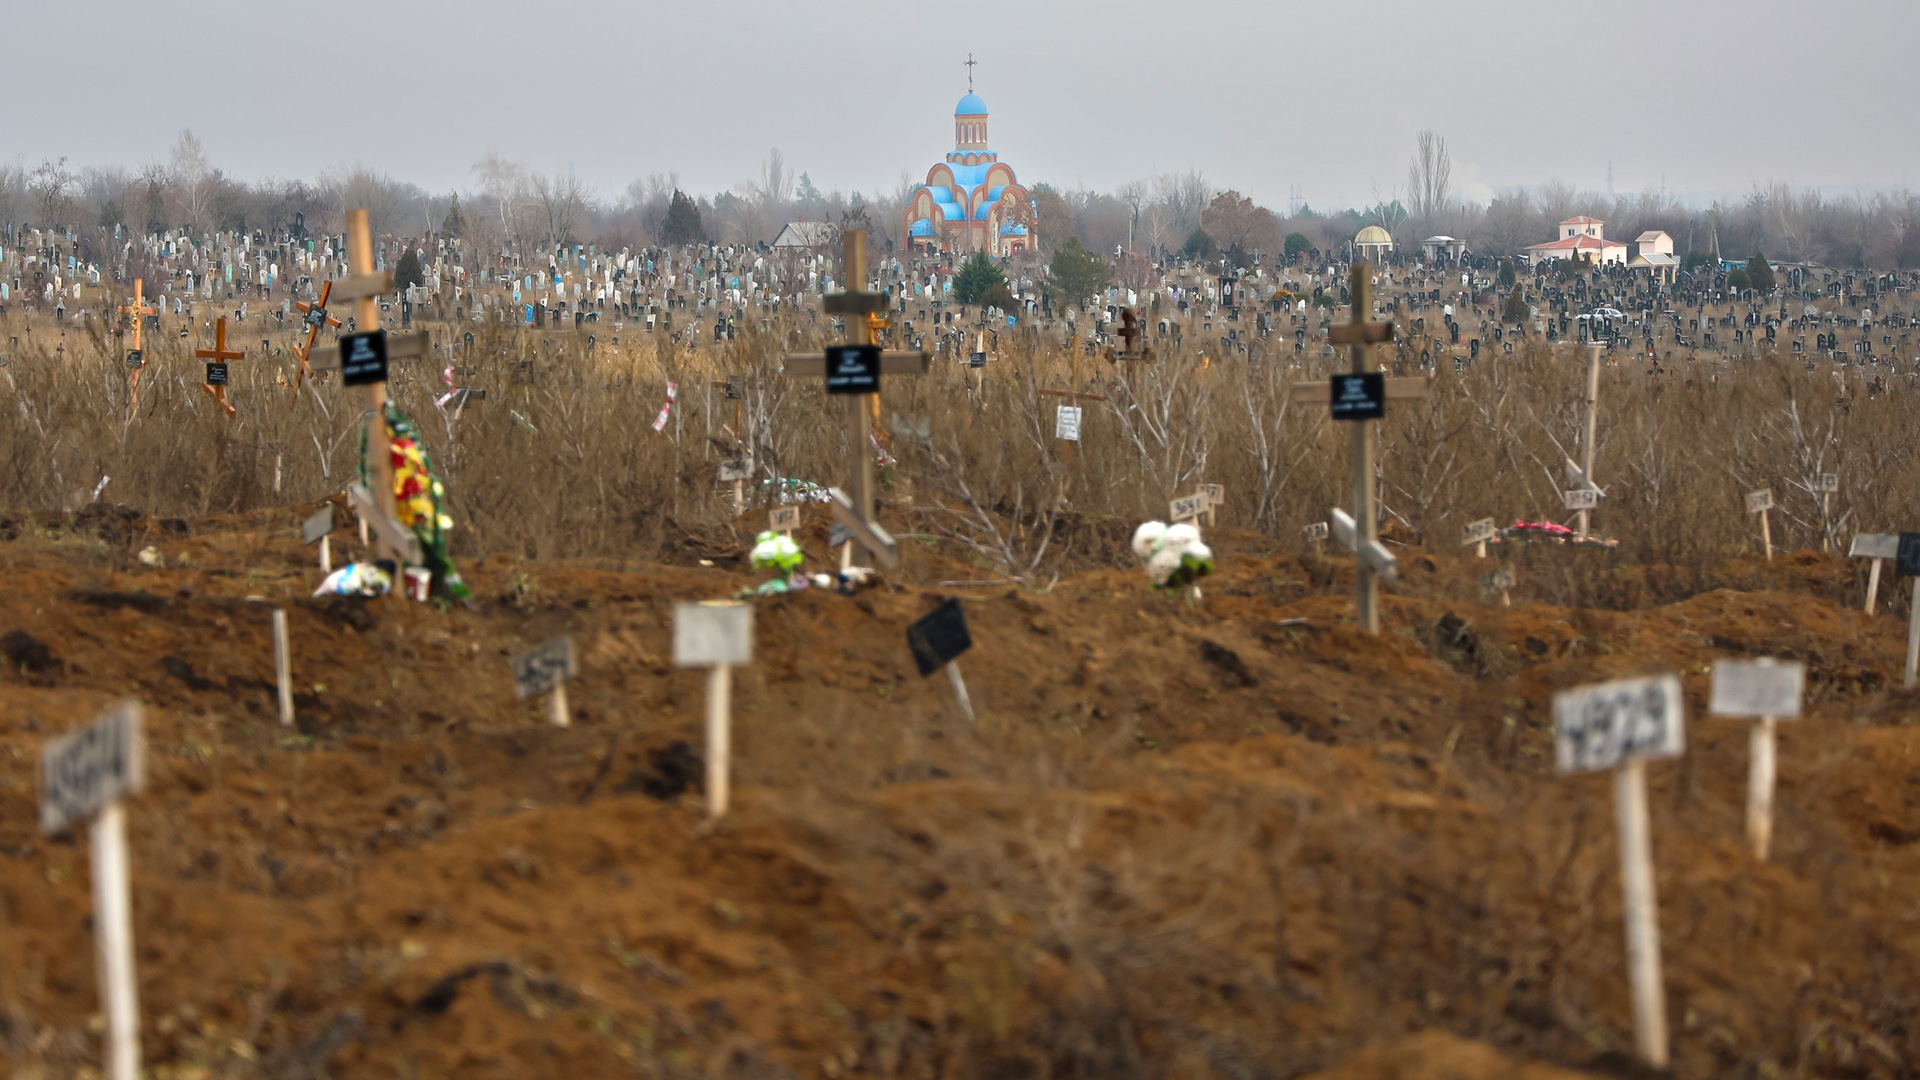 Liveblog: ++ Kiew kritisiert Hinrichtungsvorwürfe ++